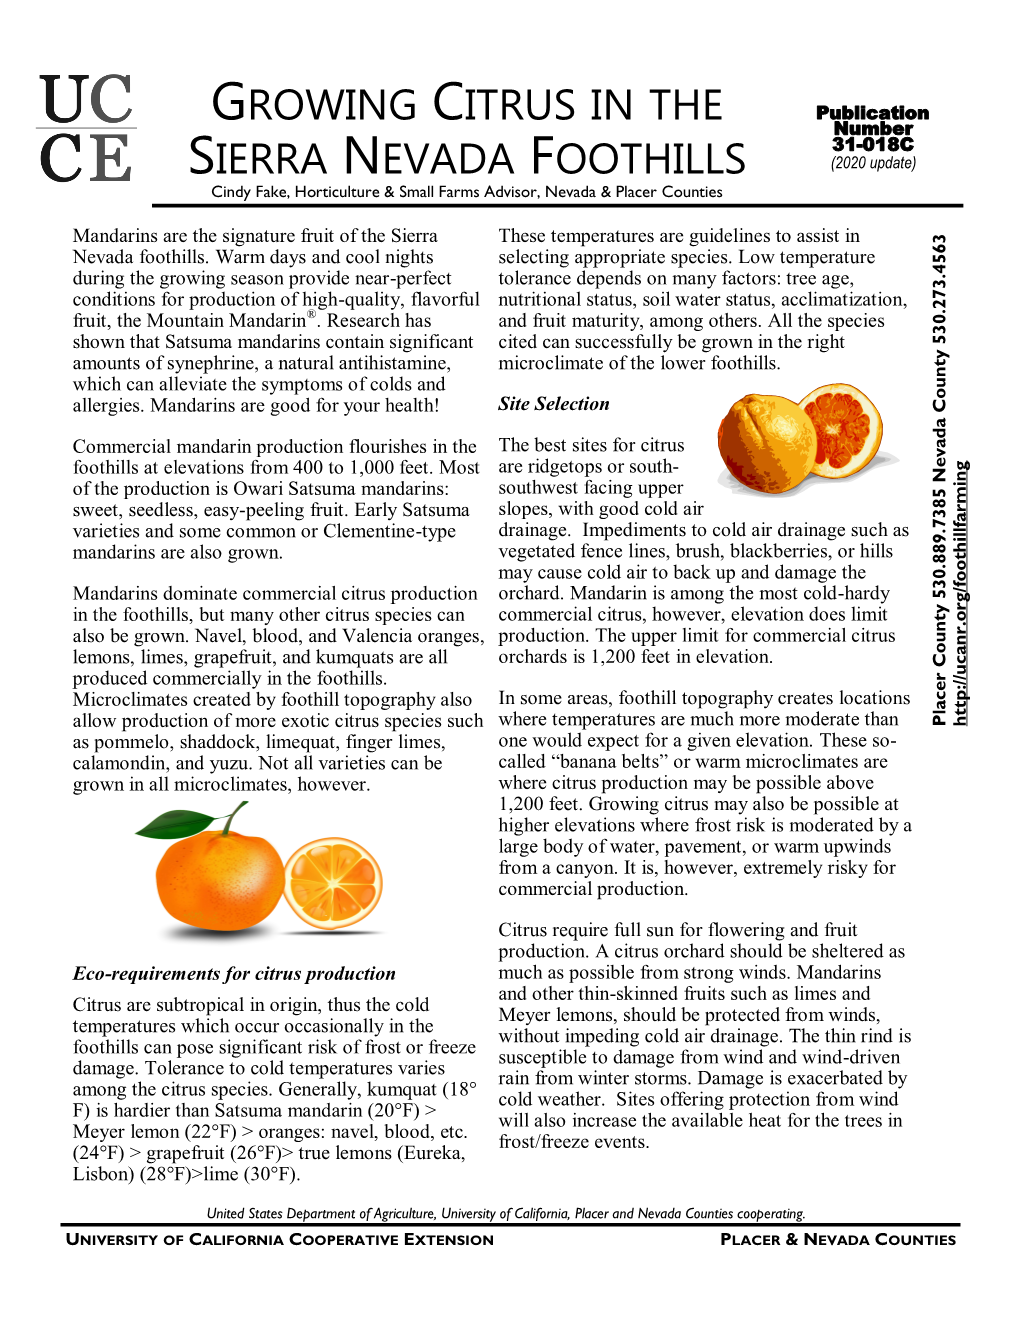 Growing Citrus in the Sierra Nevada Foothills